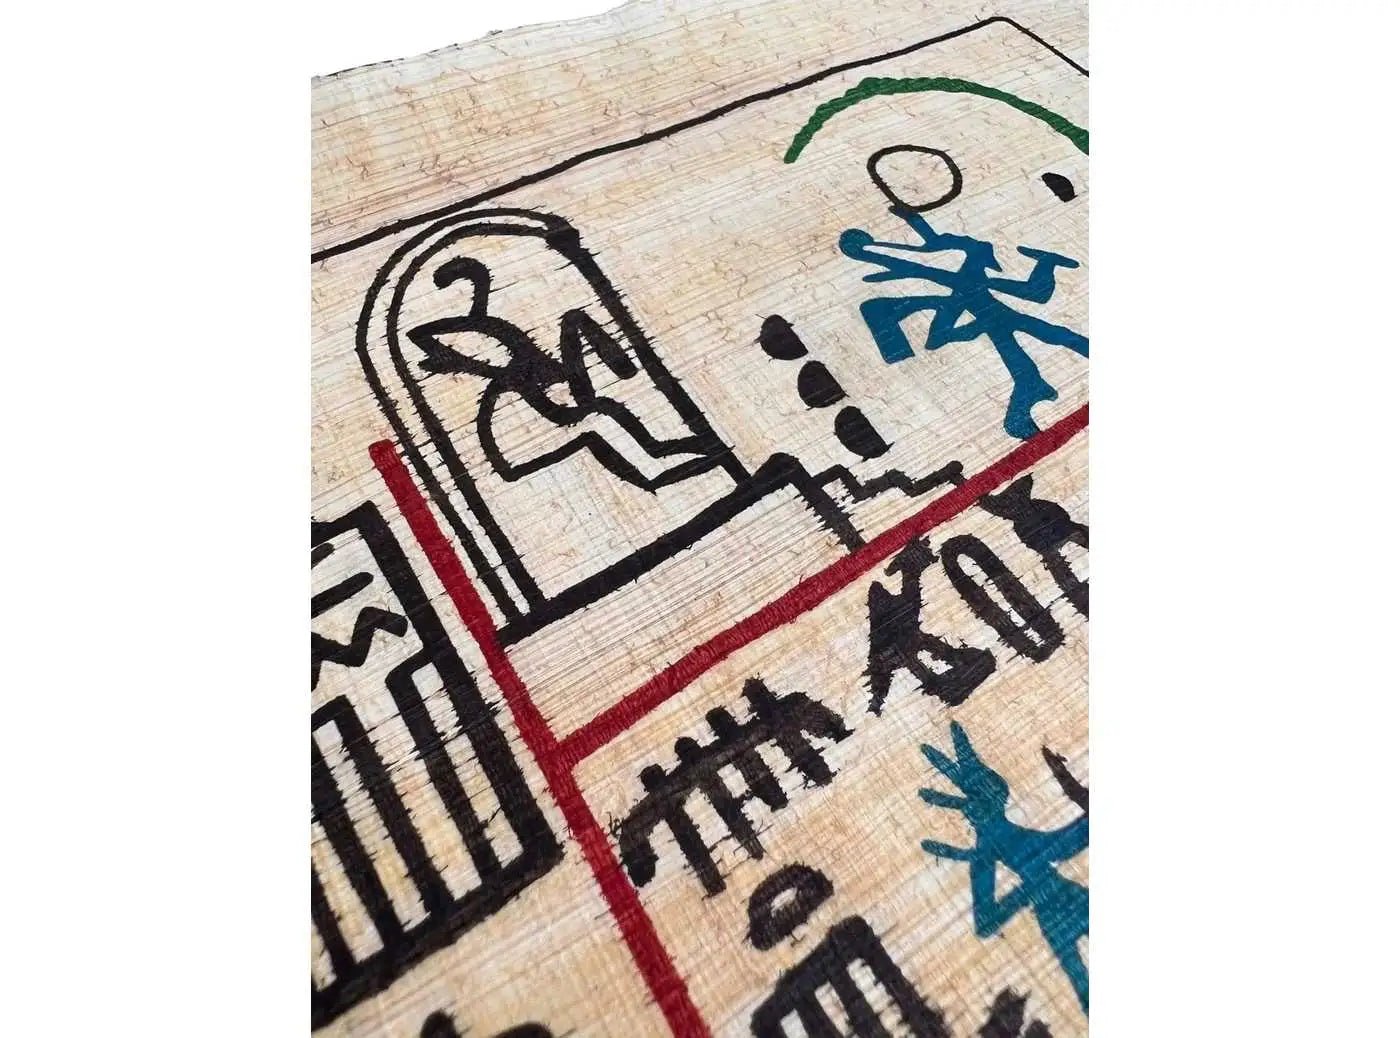 Egyptian Hieroglyphs Symbols - Vintage Printing on Egyptian Authentic Papyrus Paper